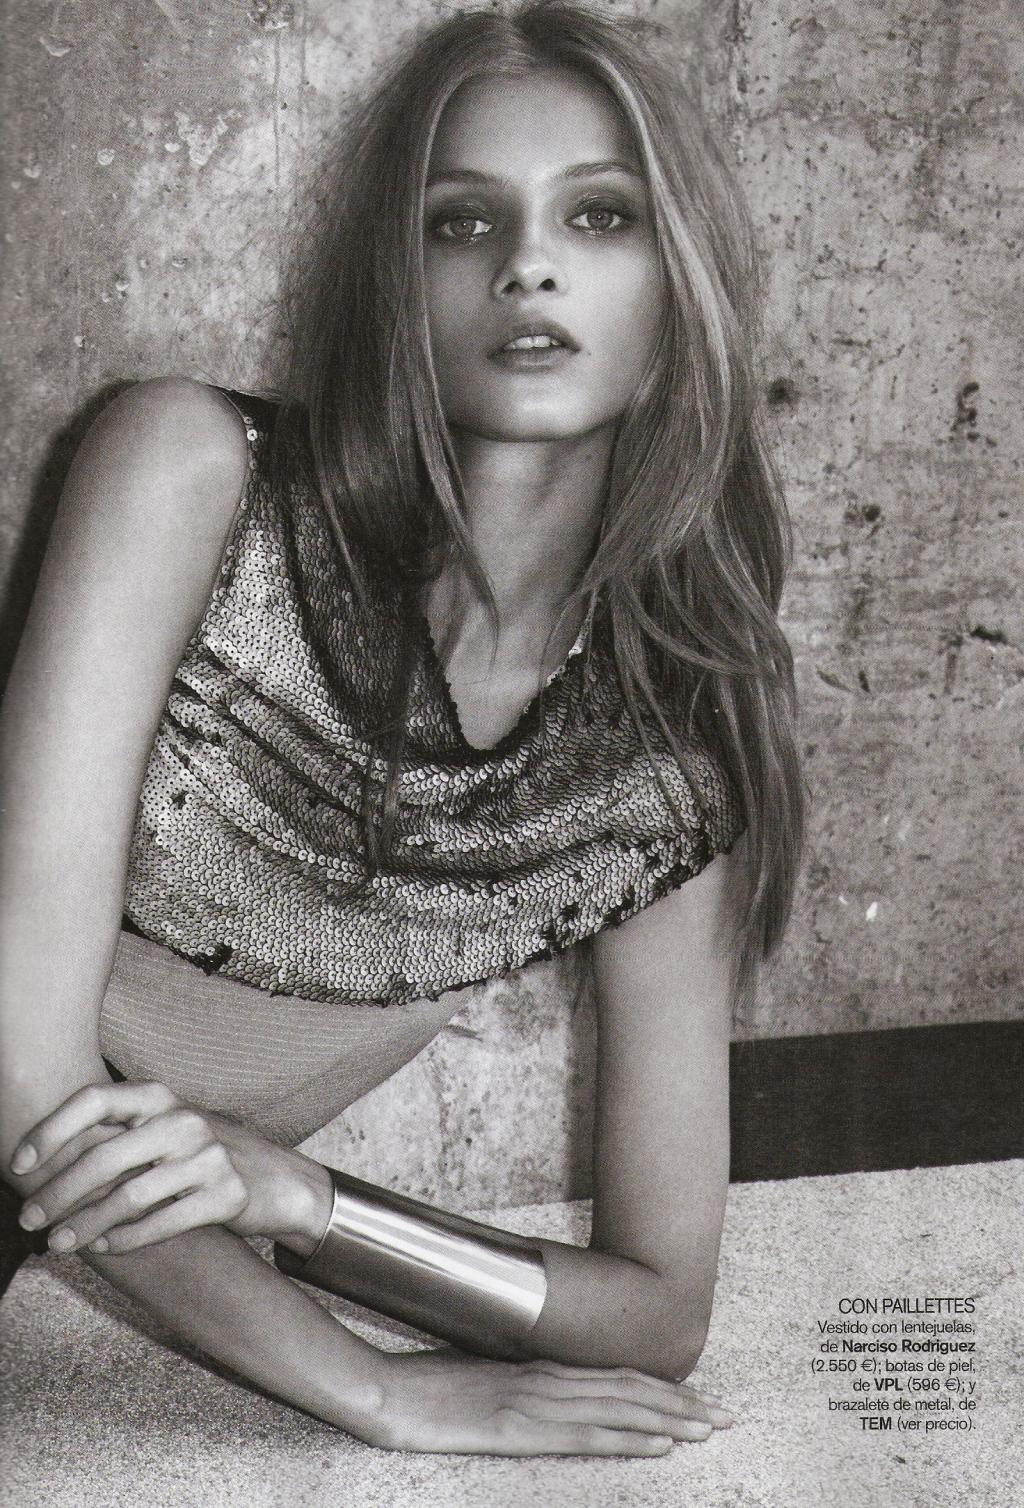 Anna Selezneva in Vogue Spain August 2010